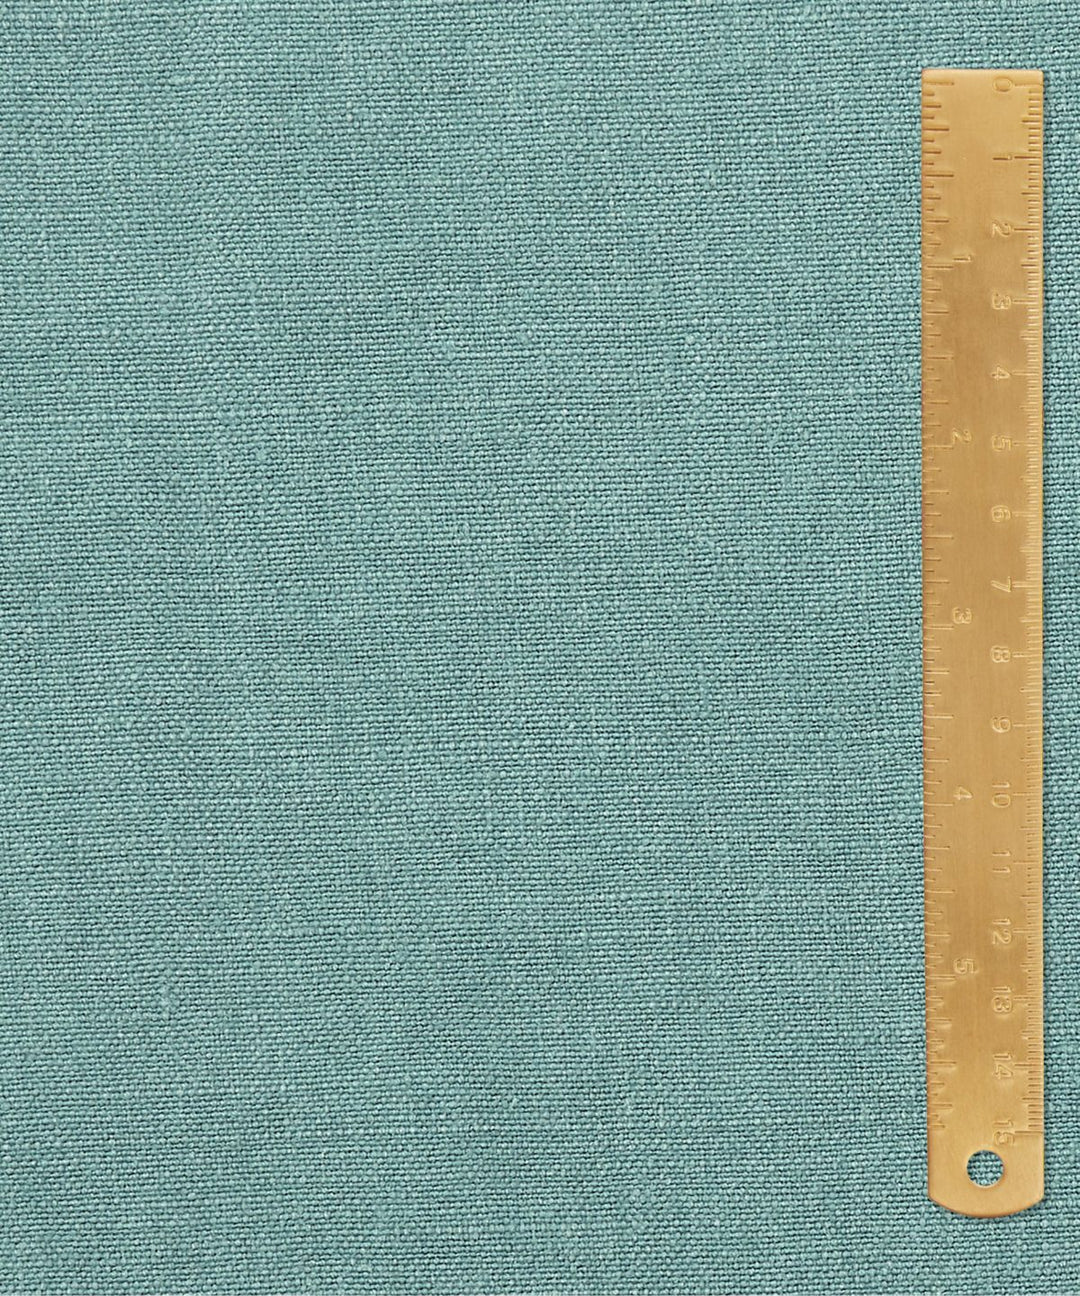 liberty-fabrics-interiors-emberton-linen-plain-robin's-egg-blue